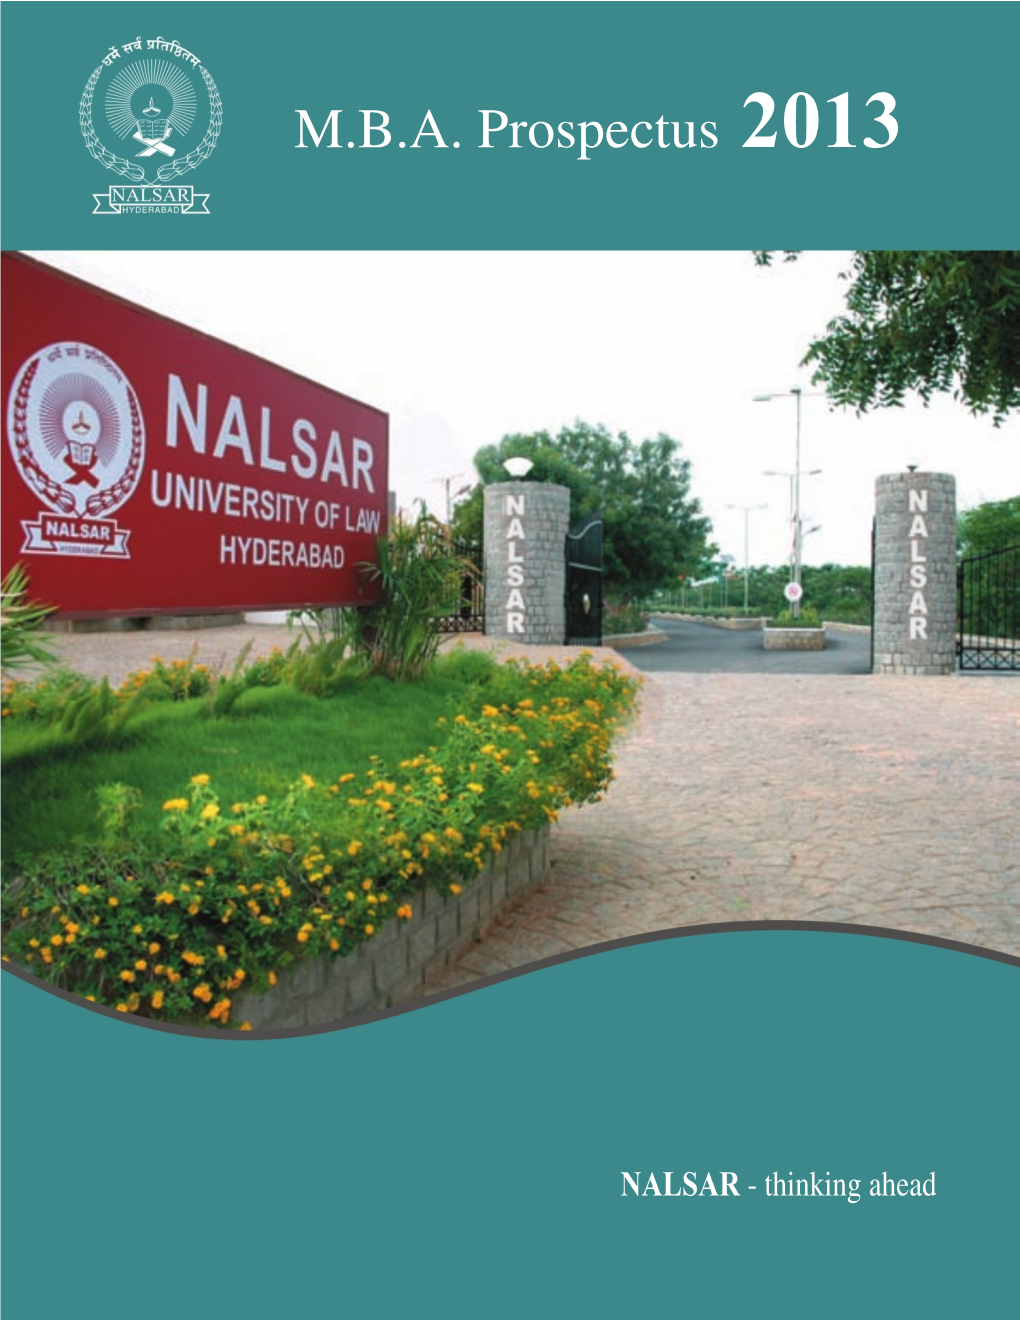 NALSAR - Thinking Ahead